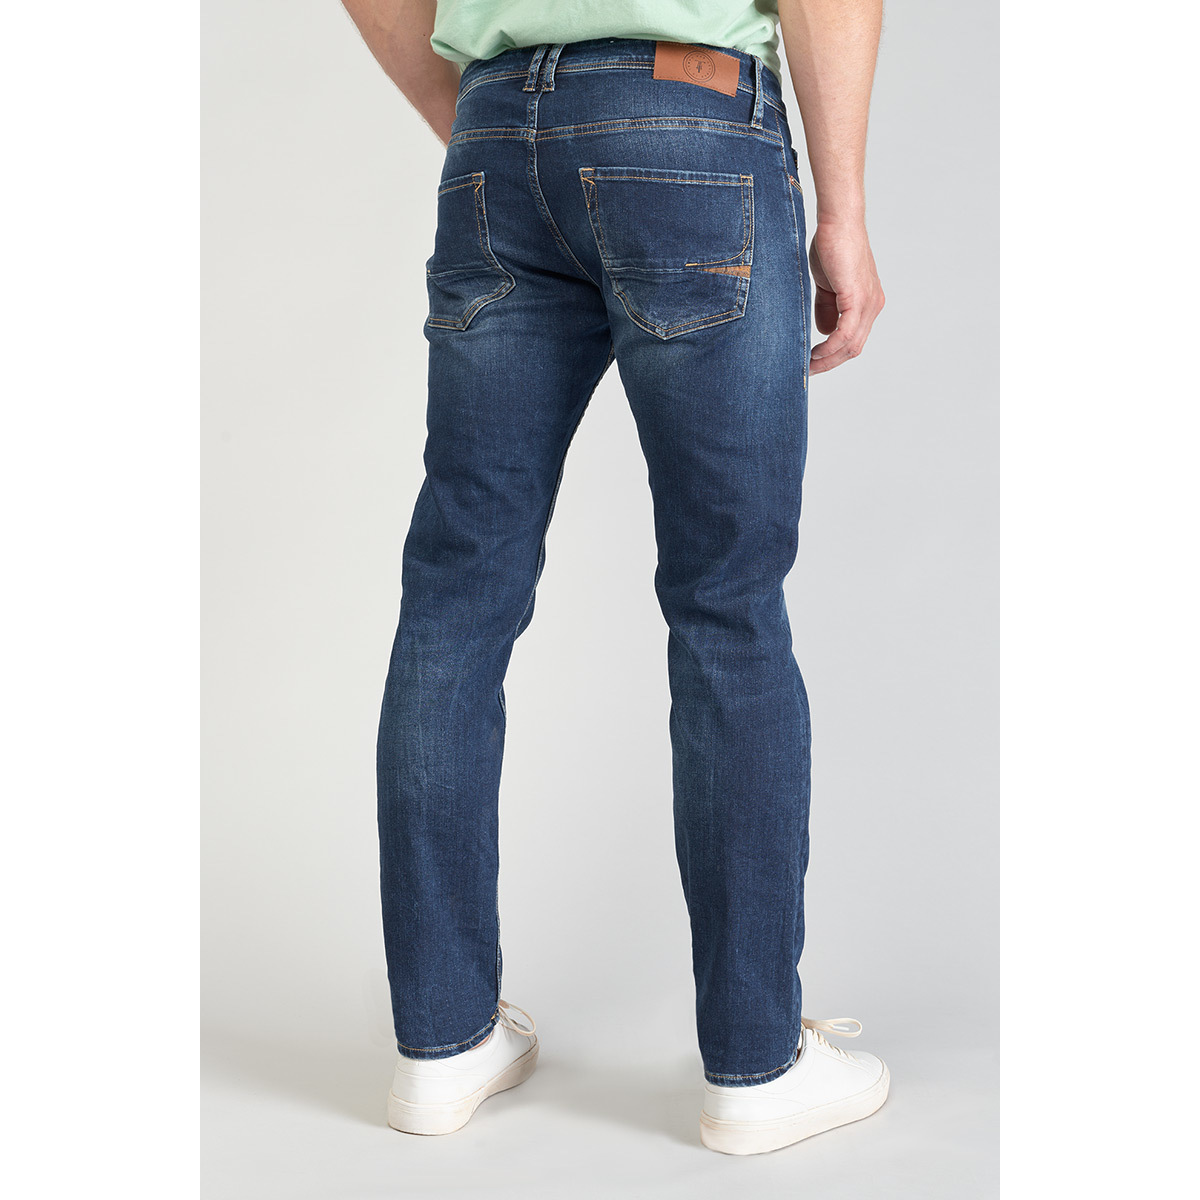 Le Temps des Cerises Bleu Basic 700/11 adjusted jeans bleu HuKxsPxS